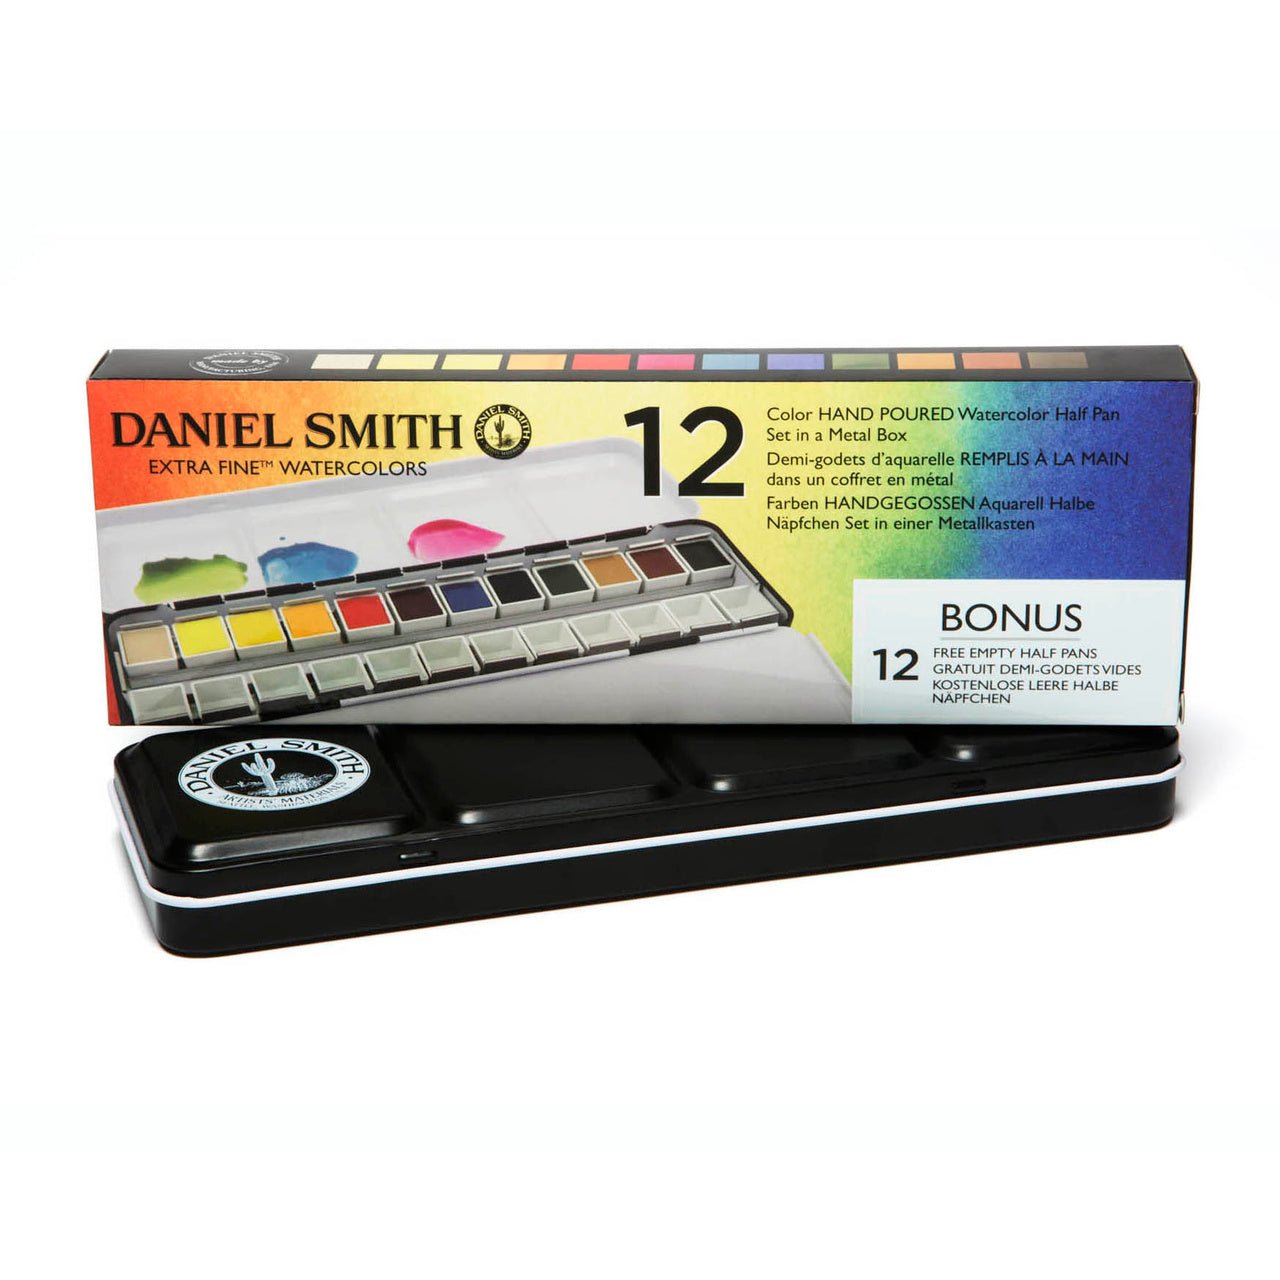 Daniel Smith Extra Fine Watercolor Set - 12 Color Hand Poured Half Pan Set in a METAL BOX with BONUS 12 Empty Half Pans - merriartist.com